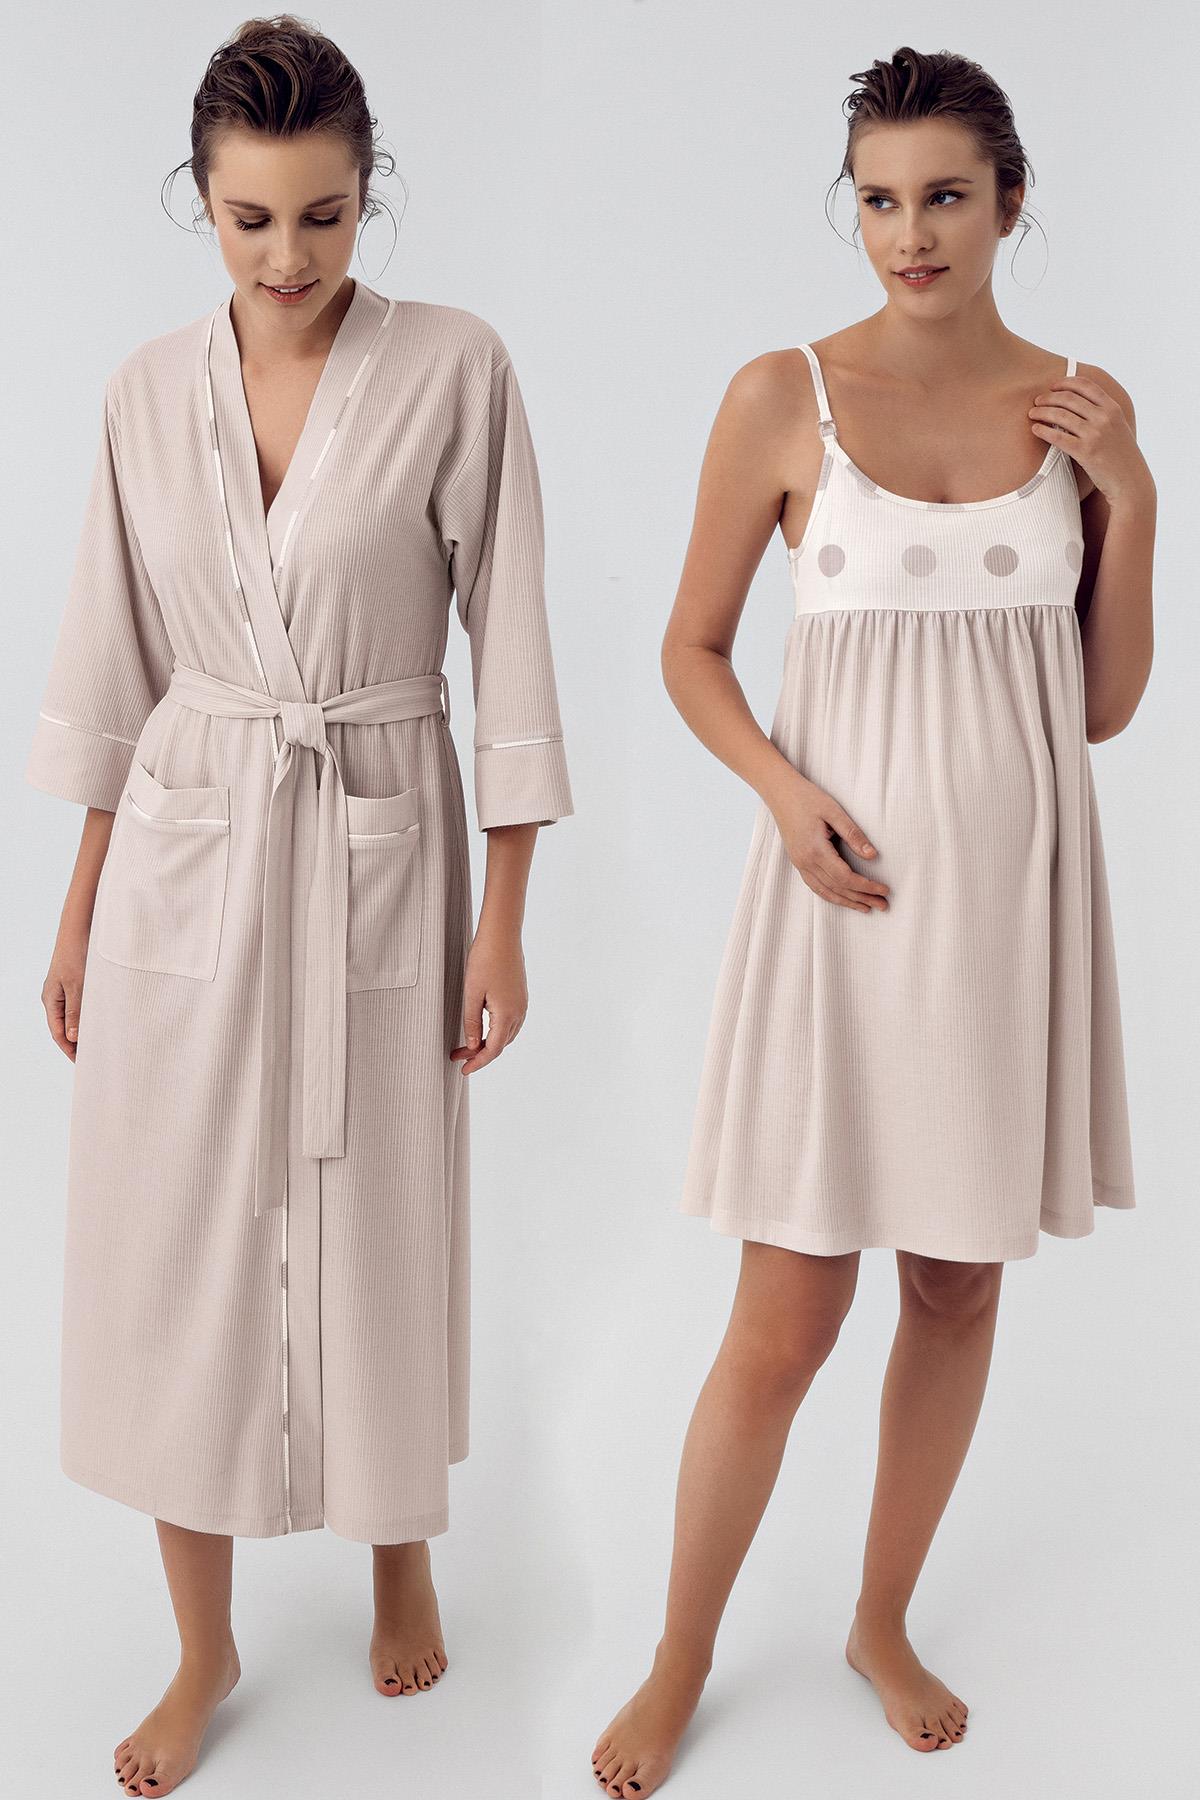 Polka Dot Strap Flexible Viscose Maternity Dressing Gown Nightgown Set 16401